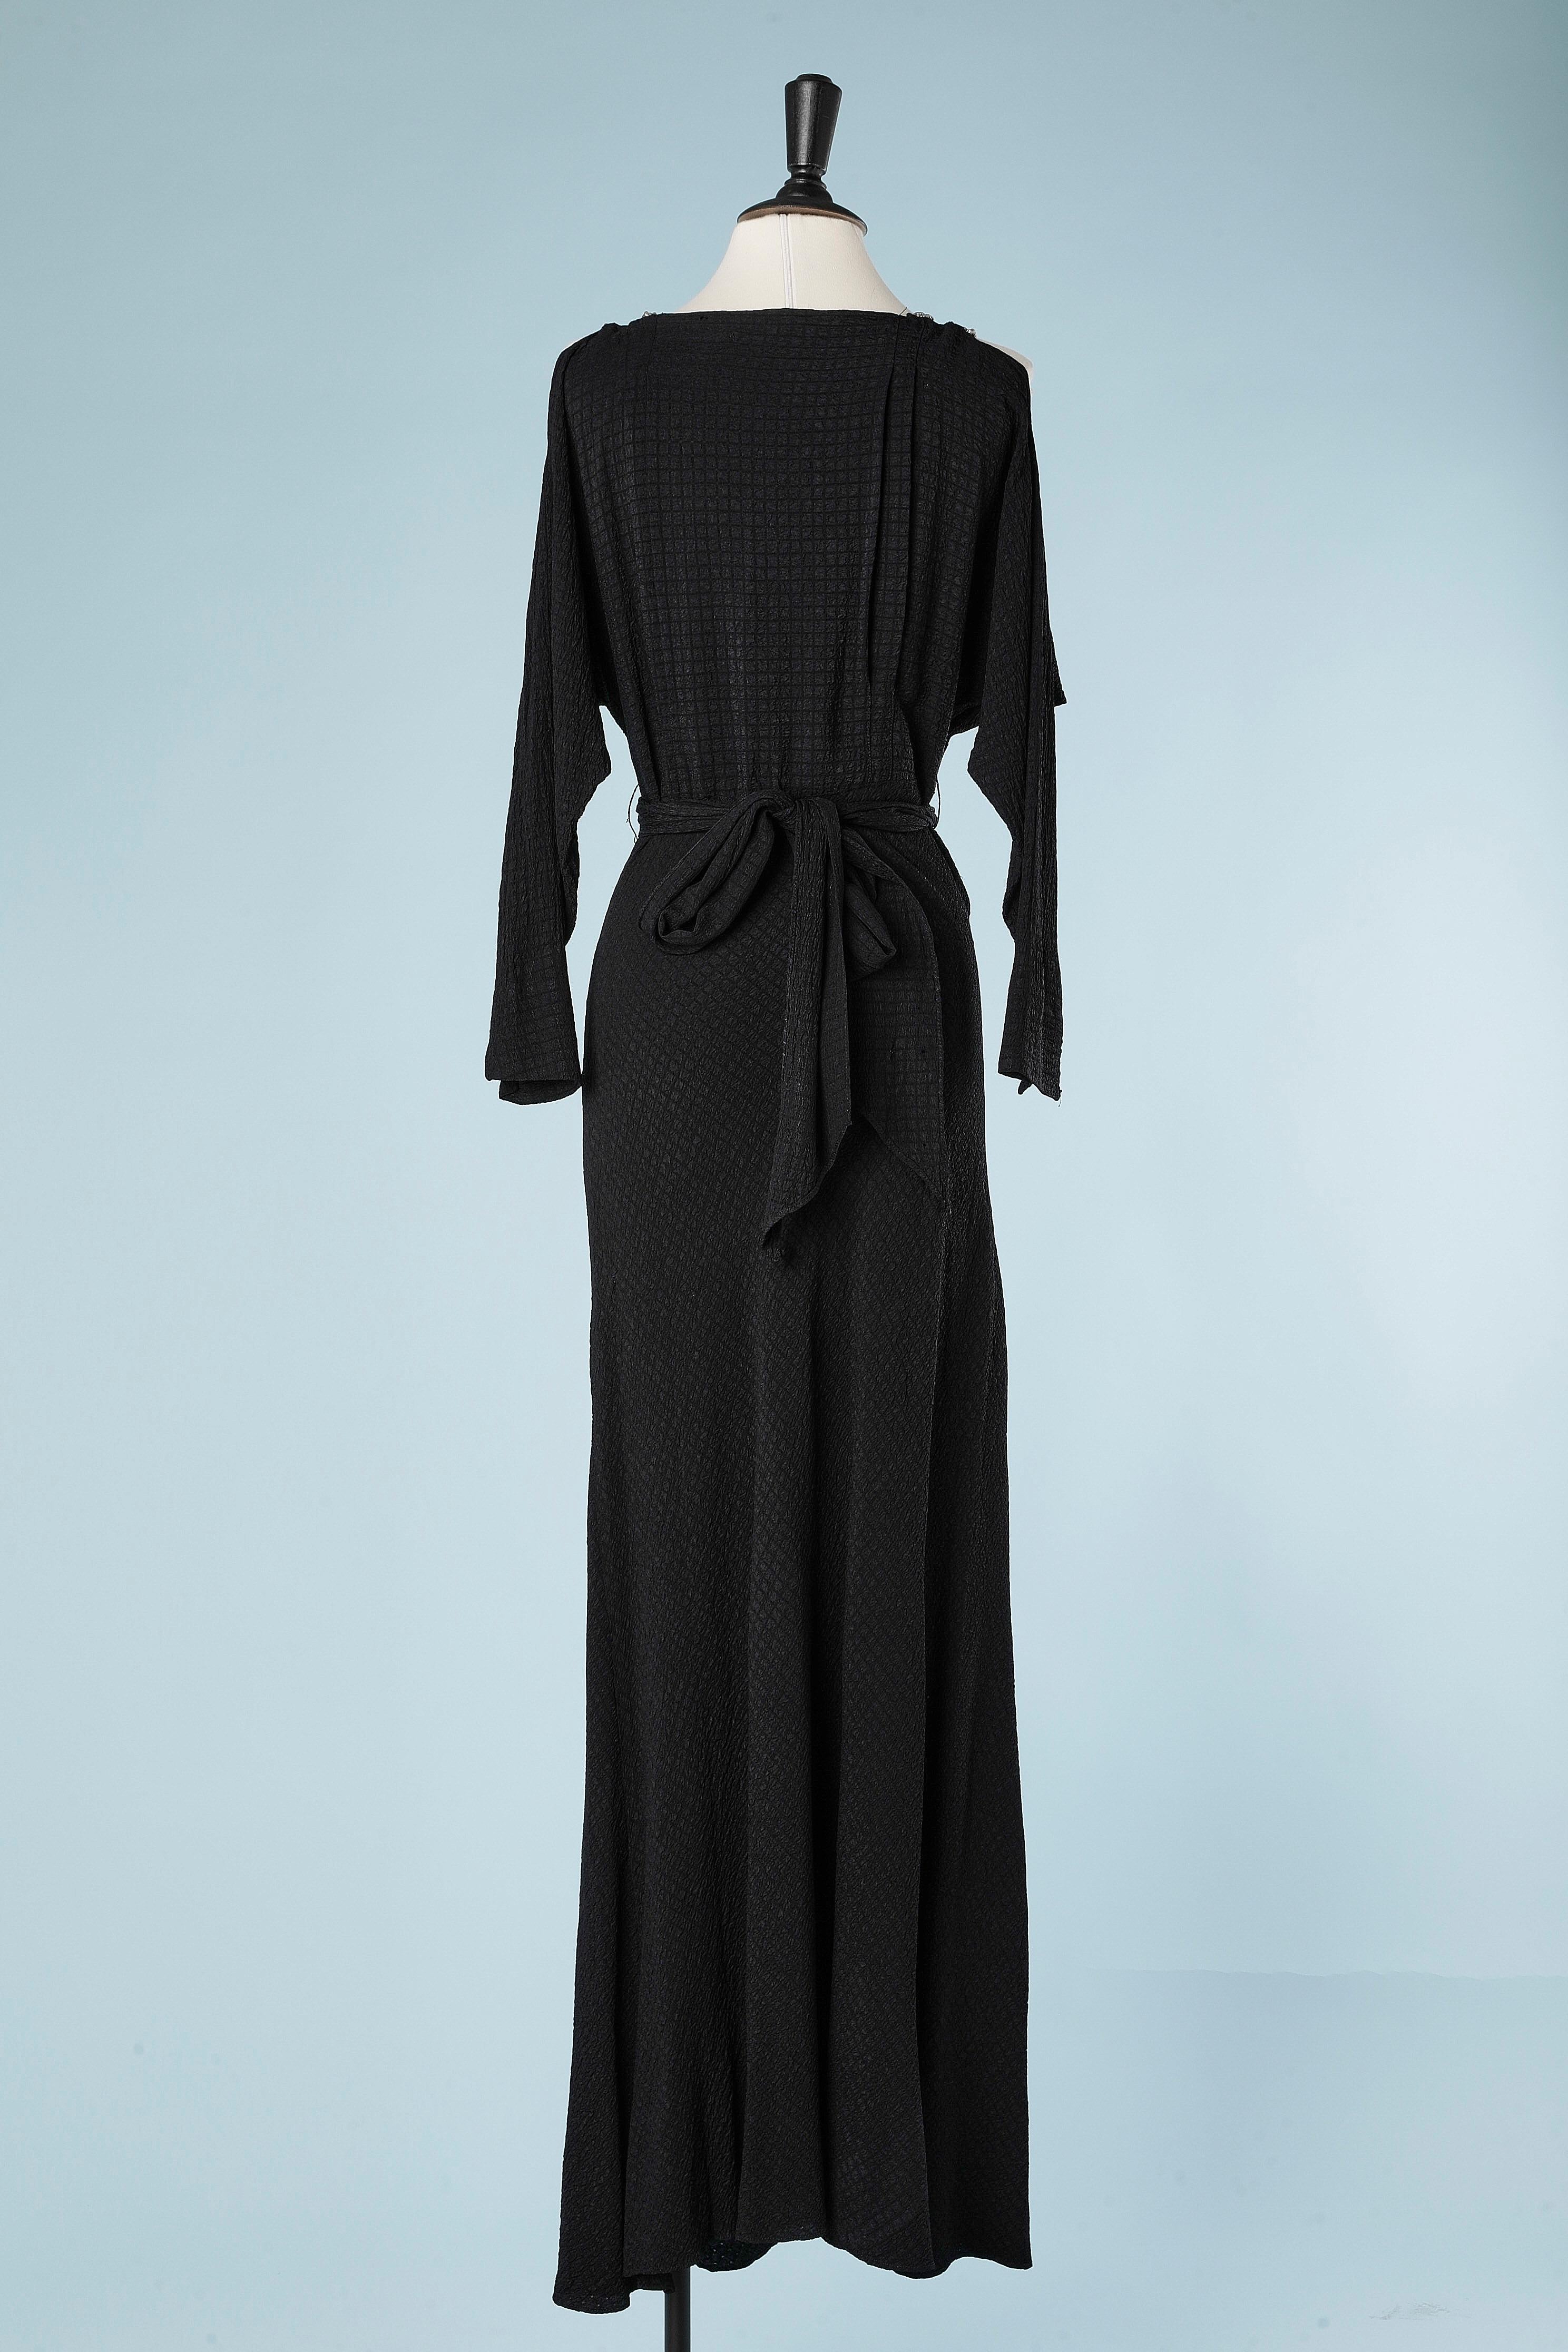 Robe du soir en crêpe noir avec bretelles et ceinture en strass Circa 1930  en vente 2